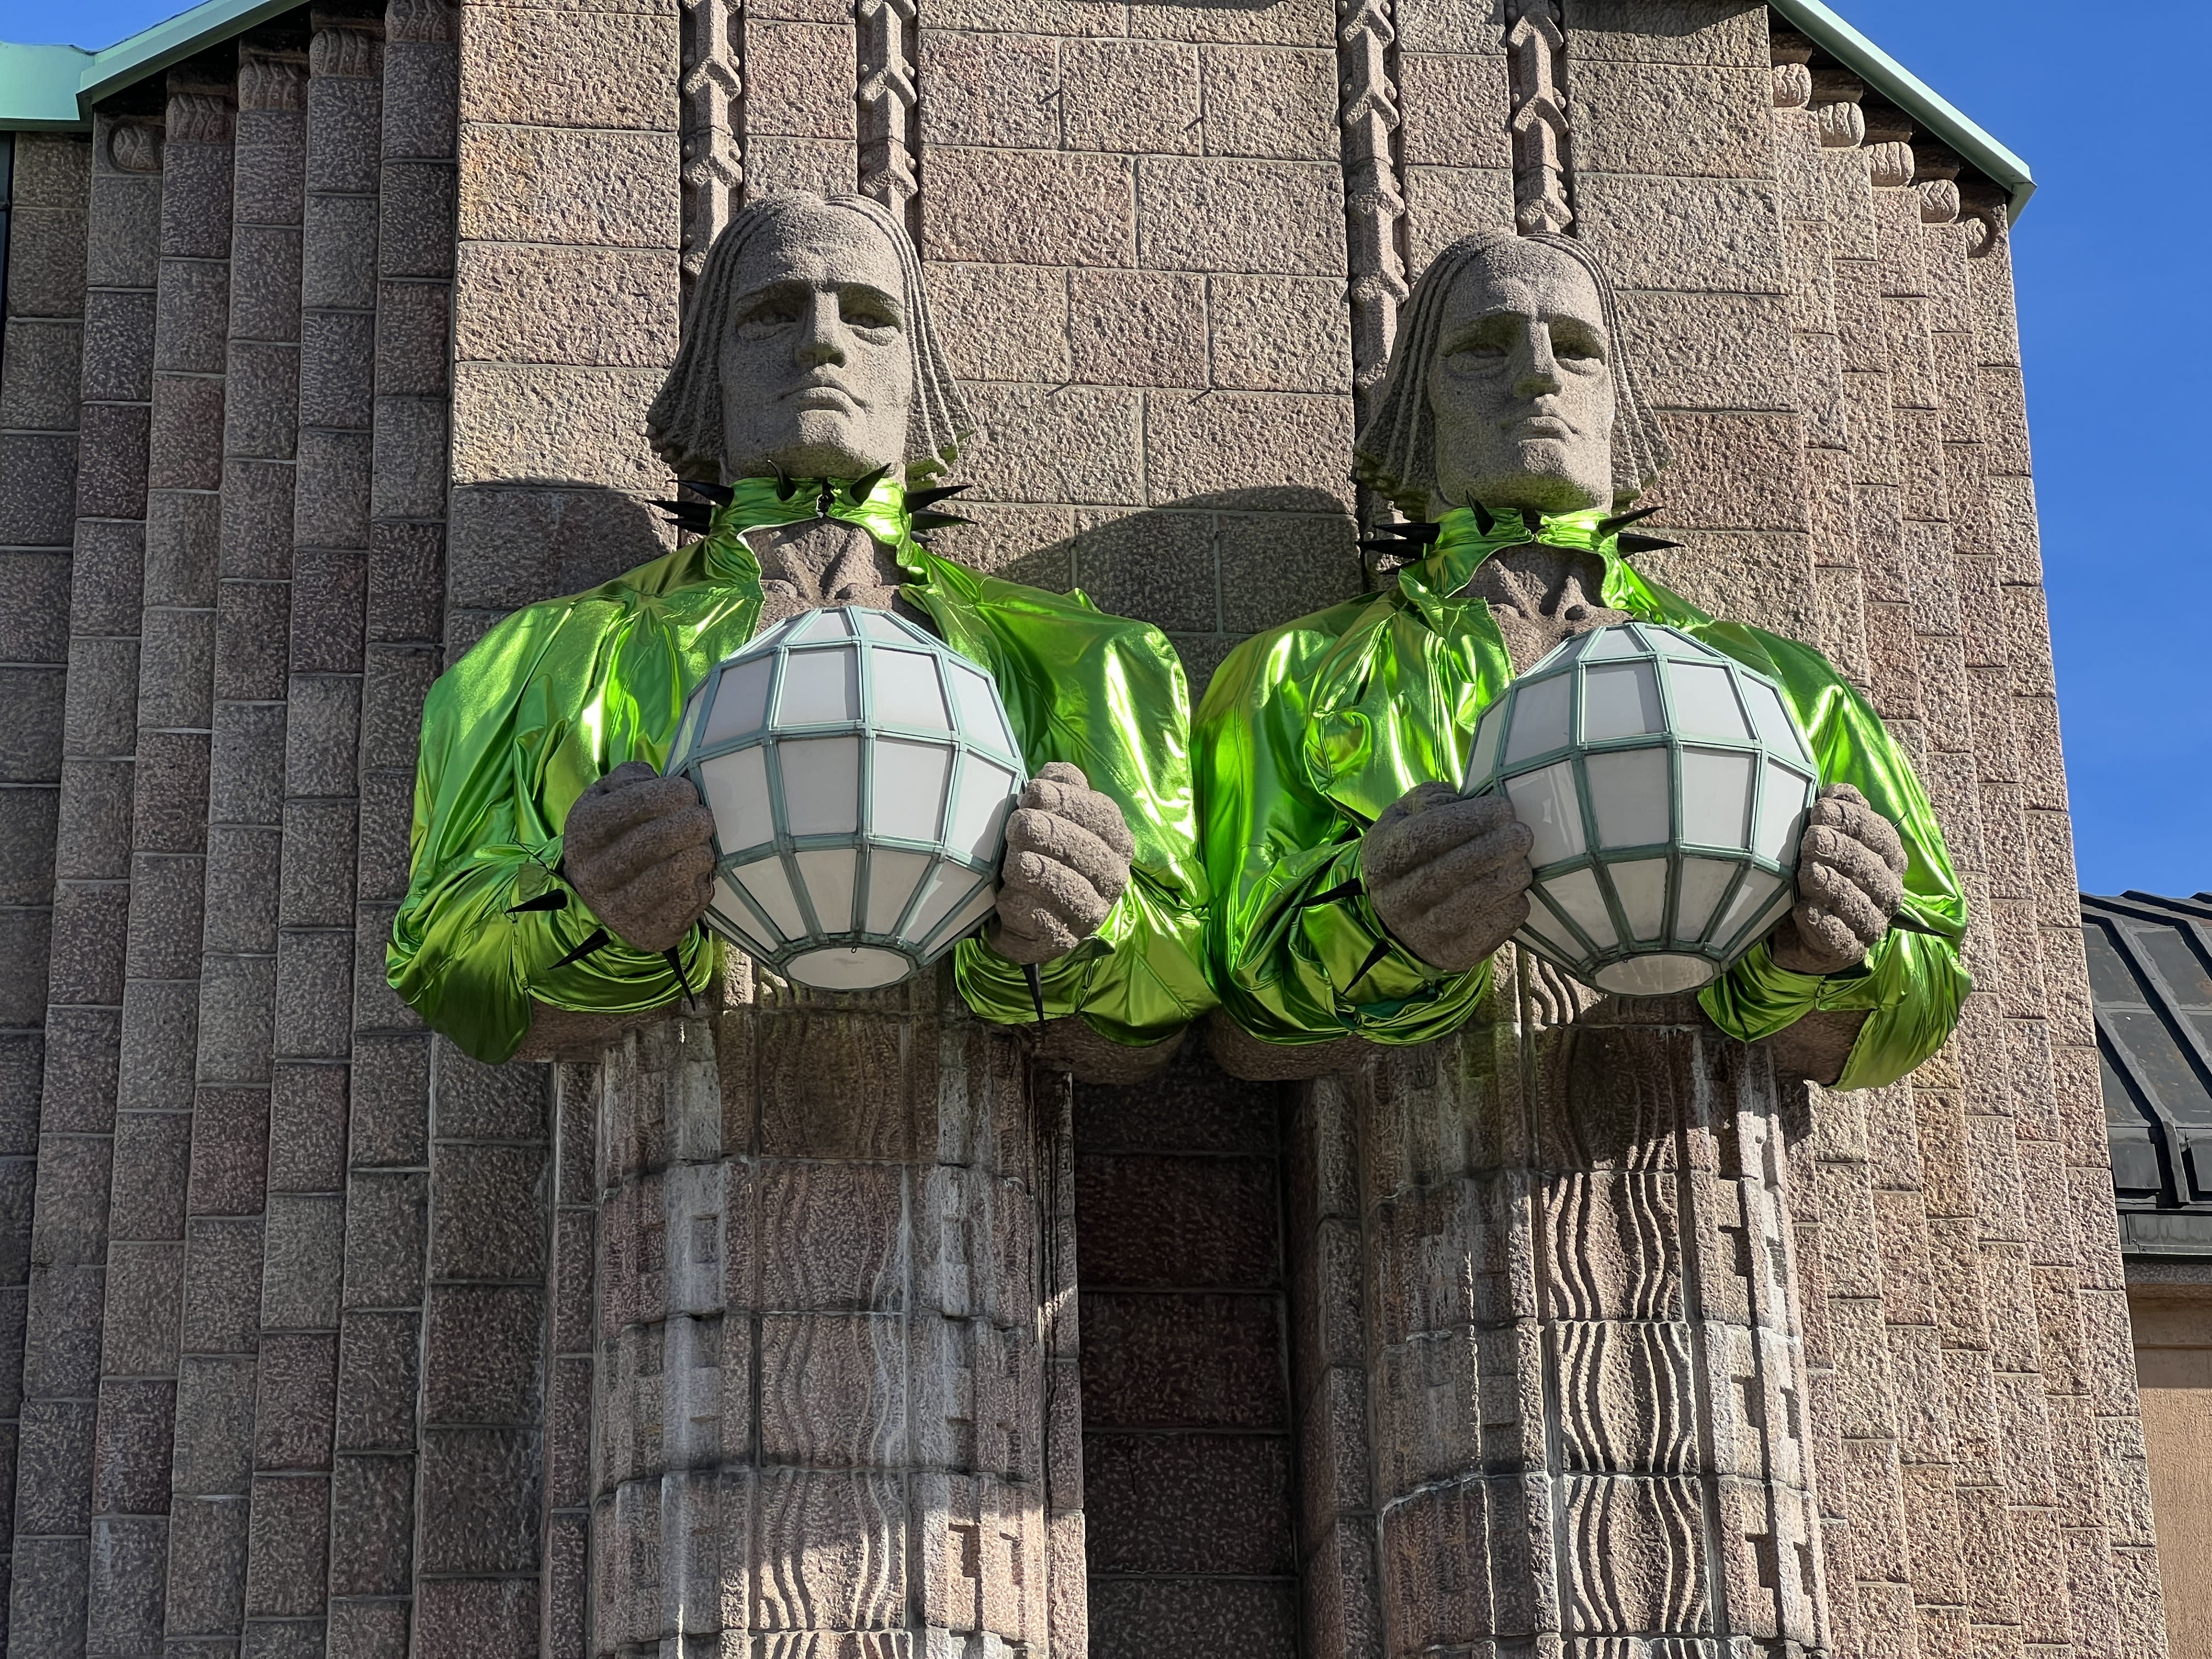 Die kultige Helsinki-Statue Käärijä in Boleros, während das Eurovisionsfieber Finnland erfasst